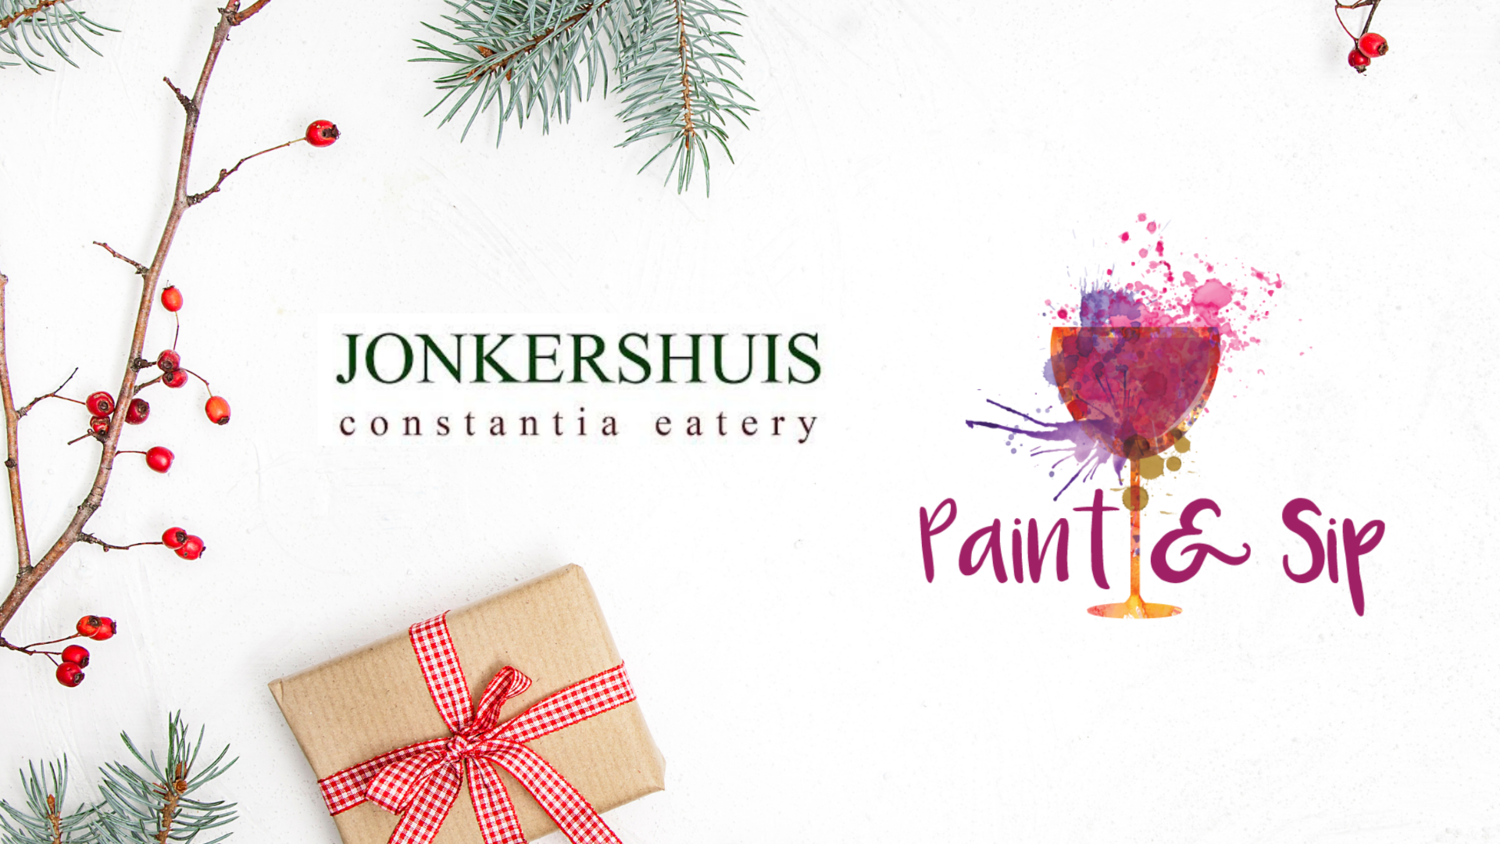 Festive Paint & Sip at Jonkershuis (Constantia) | 3rd December 2020